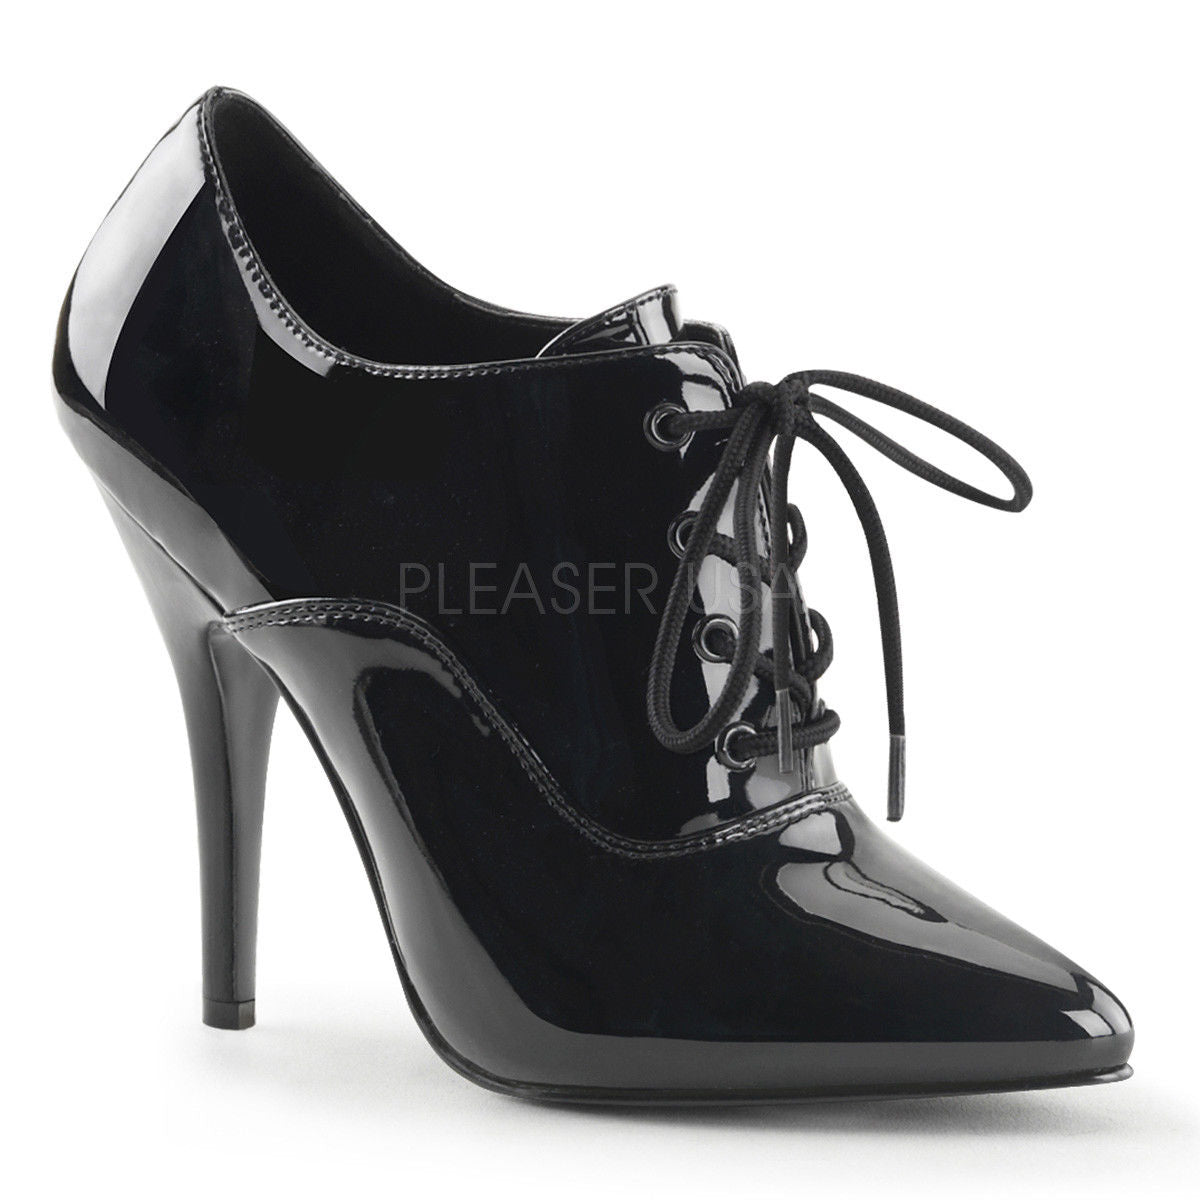 PLEASER Seduce-460 Black Posh Work Dress Oxford Booties Pumps Drag 5" Heels 4-15 - A Shoe Addiction